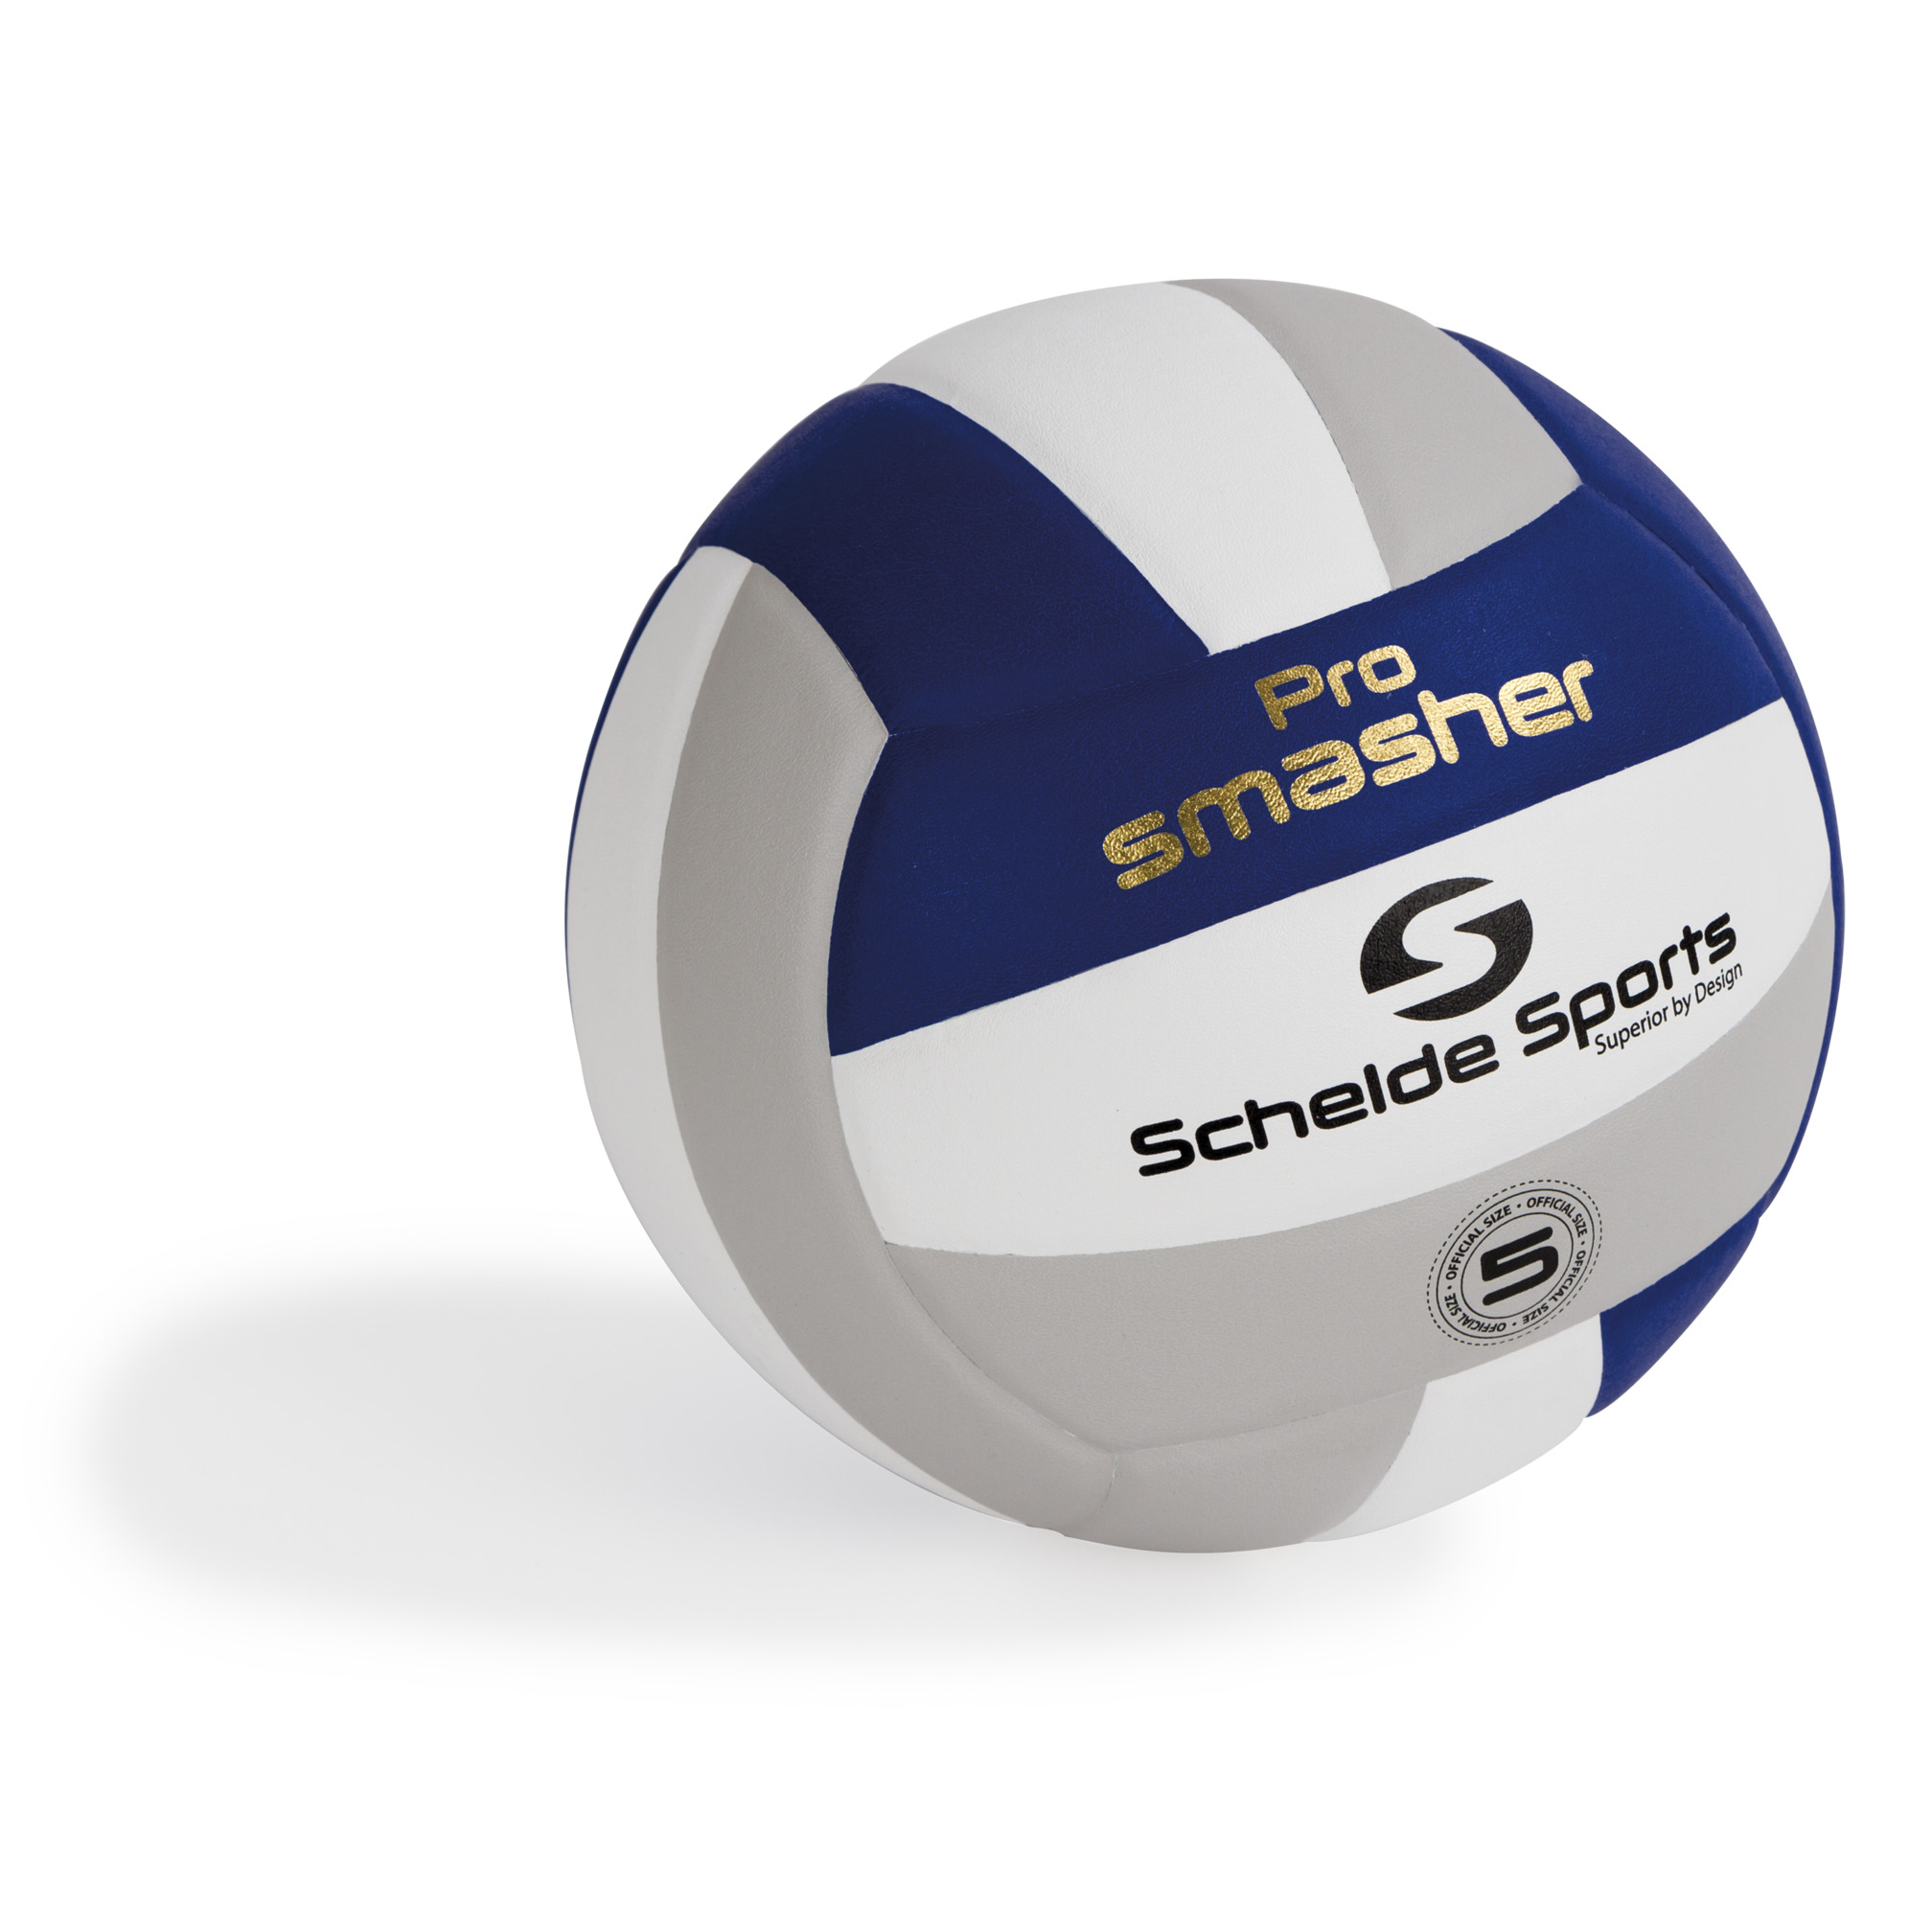 Schelde Sports Volleyball Pro Smasher, size 5